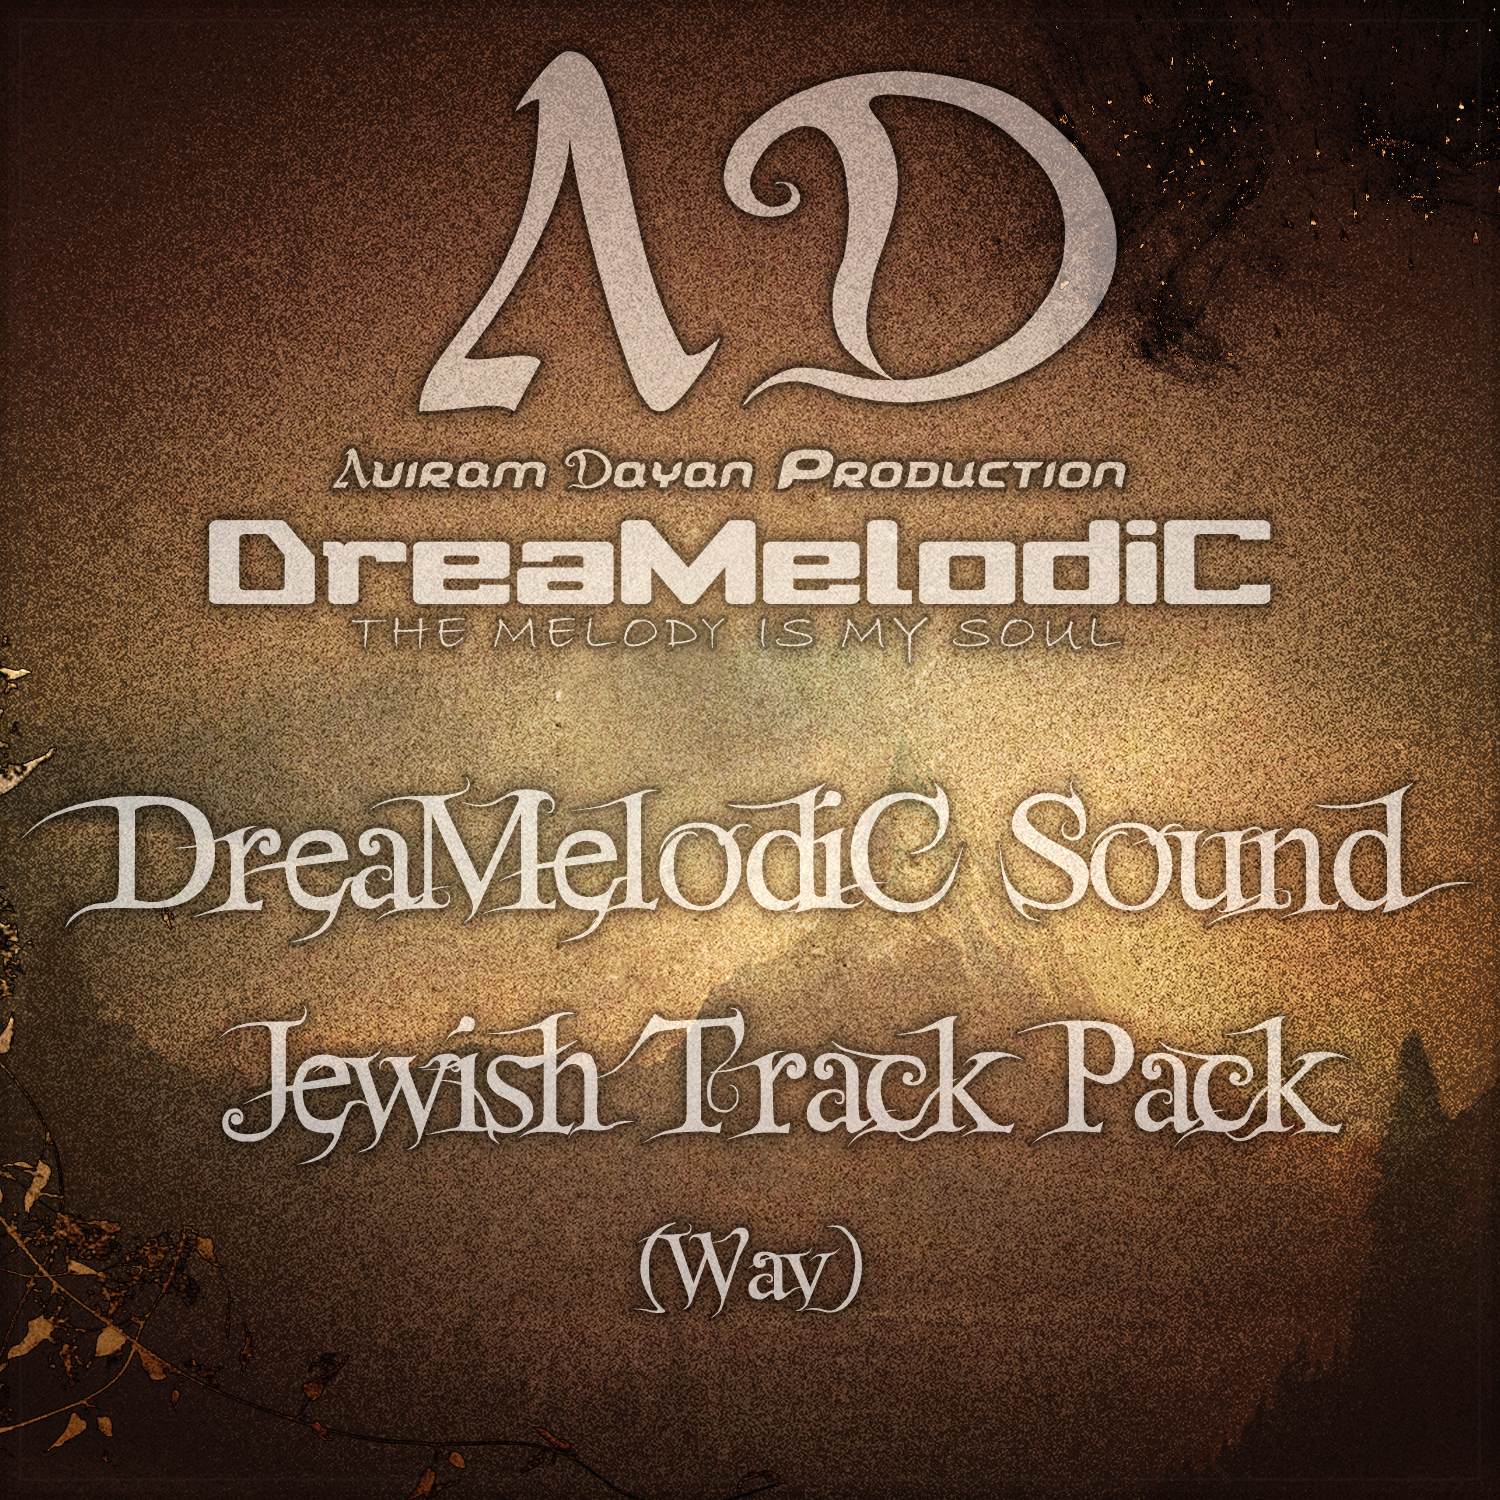 DreaMelodiC Sound - Jewish Track Pack